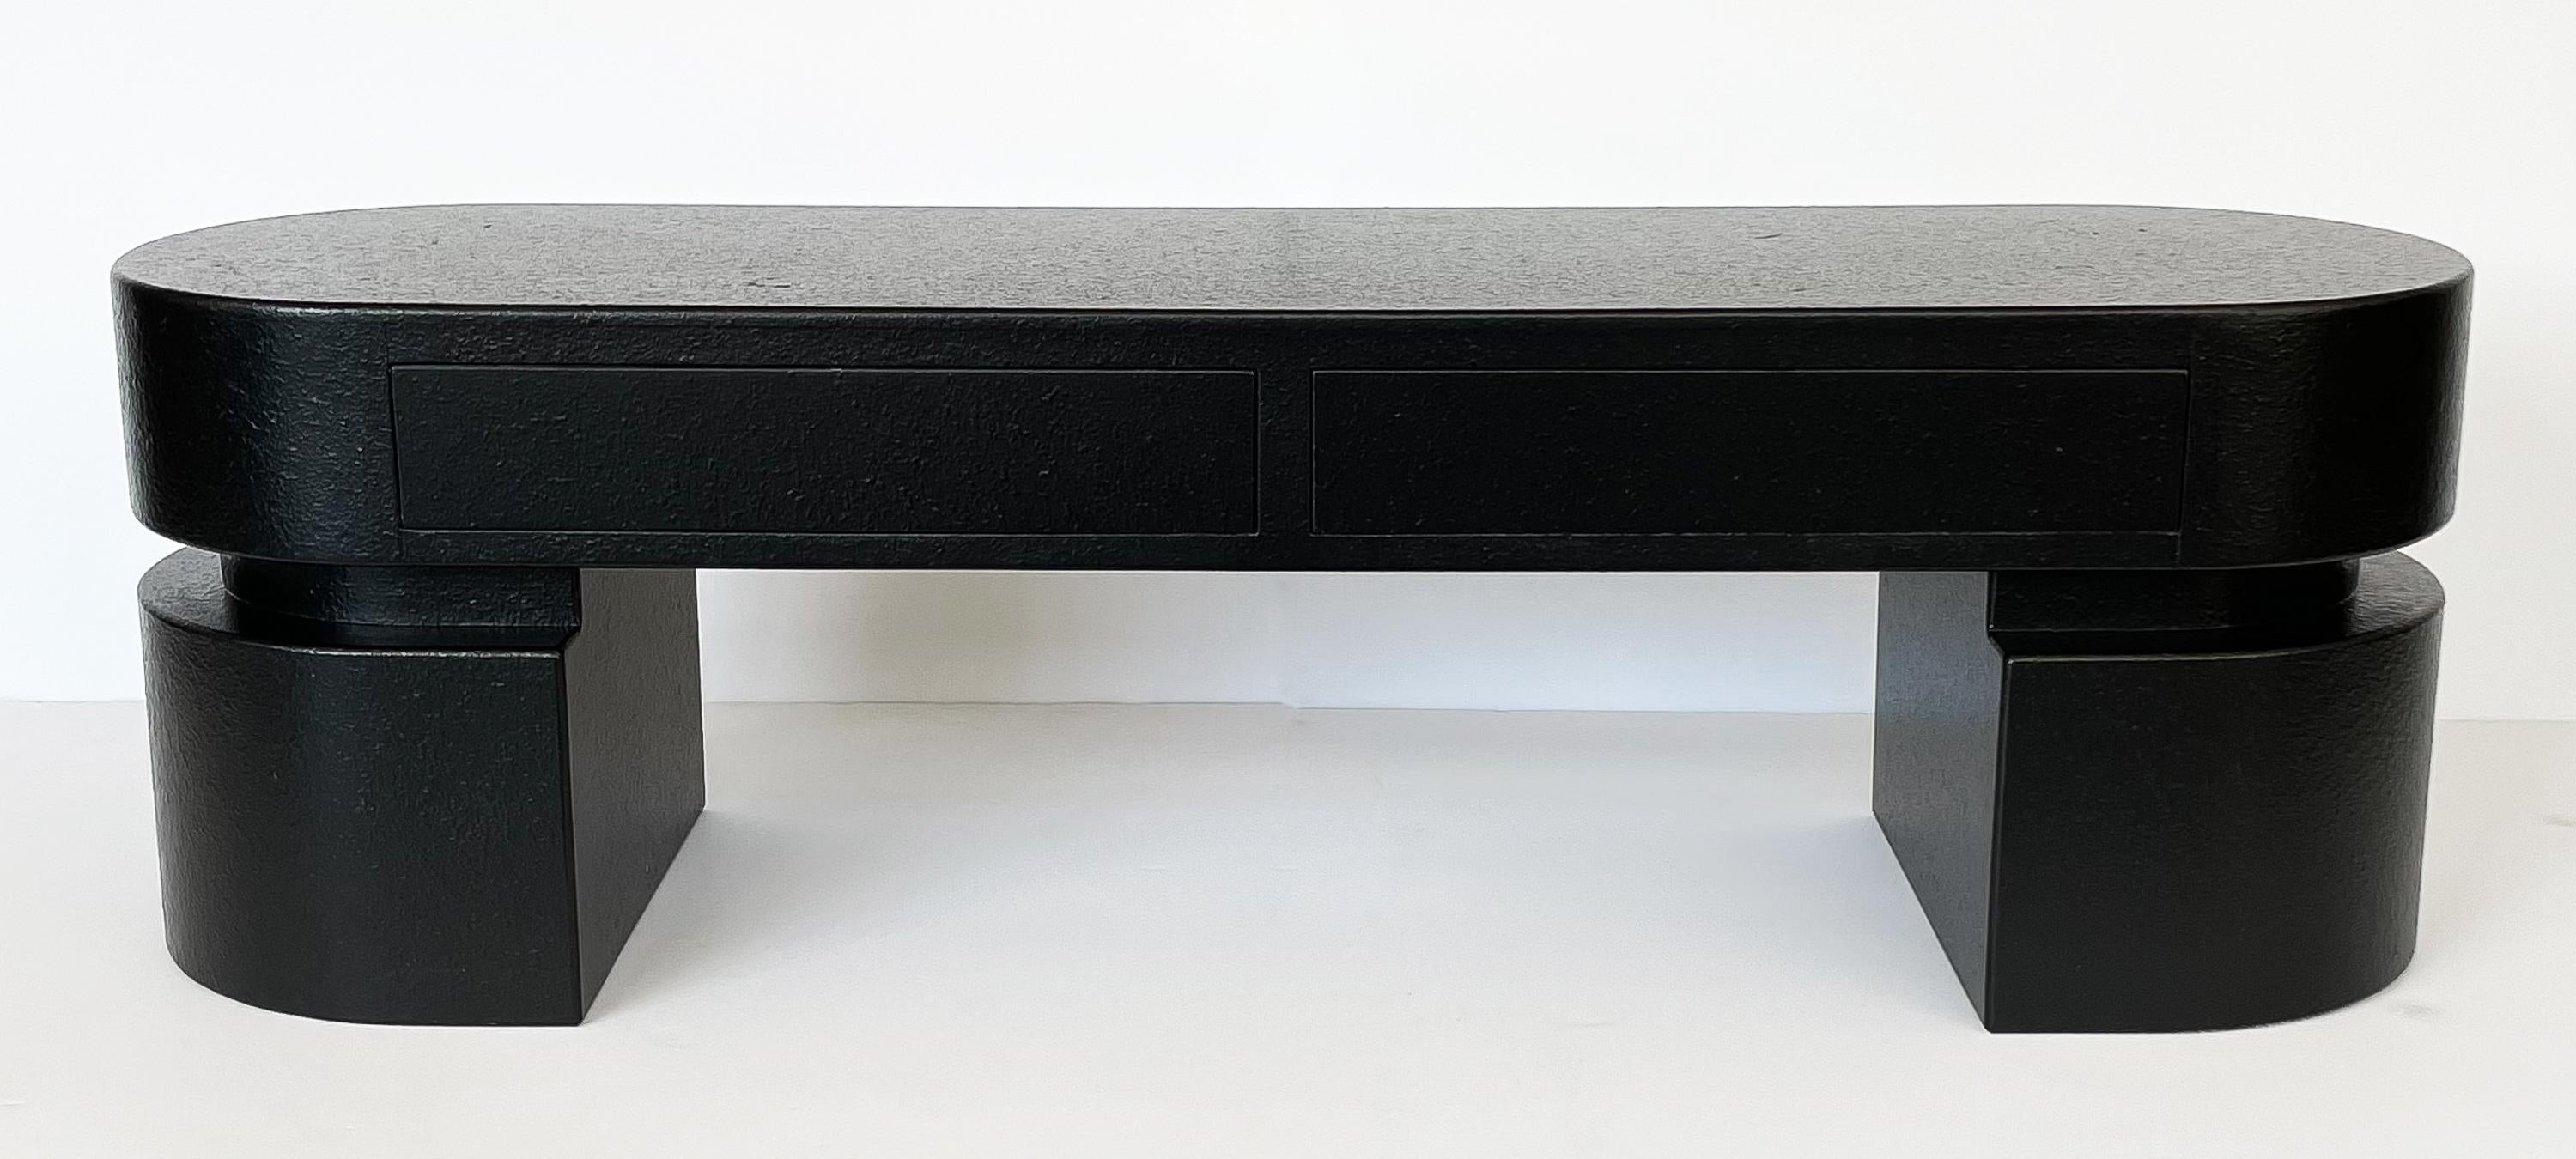 American Minimalist Modern Black Narrow Coffee Table / Bench